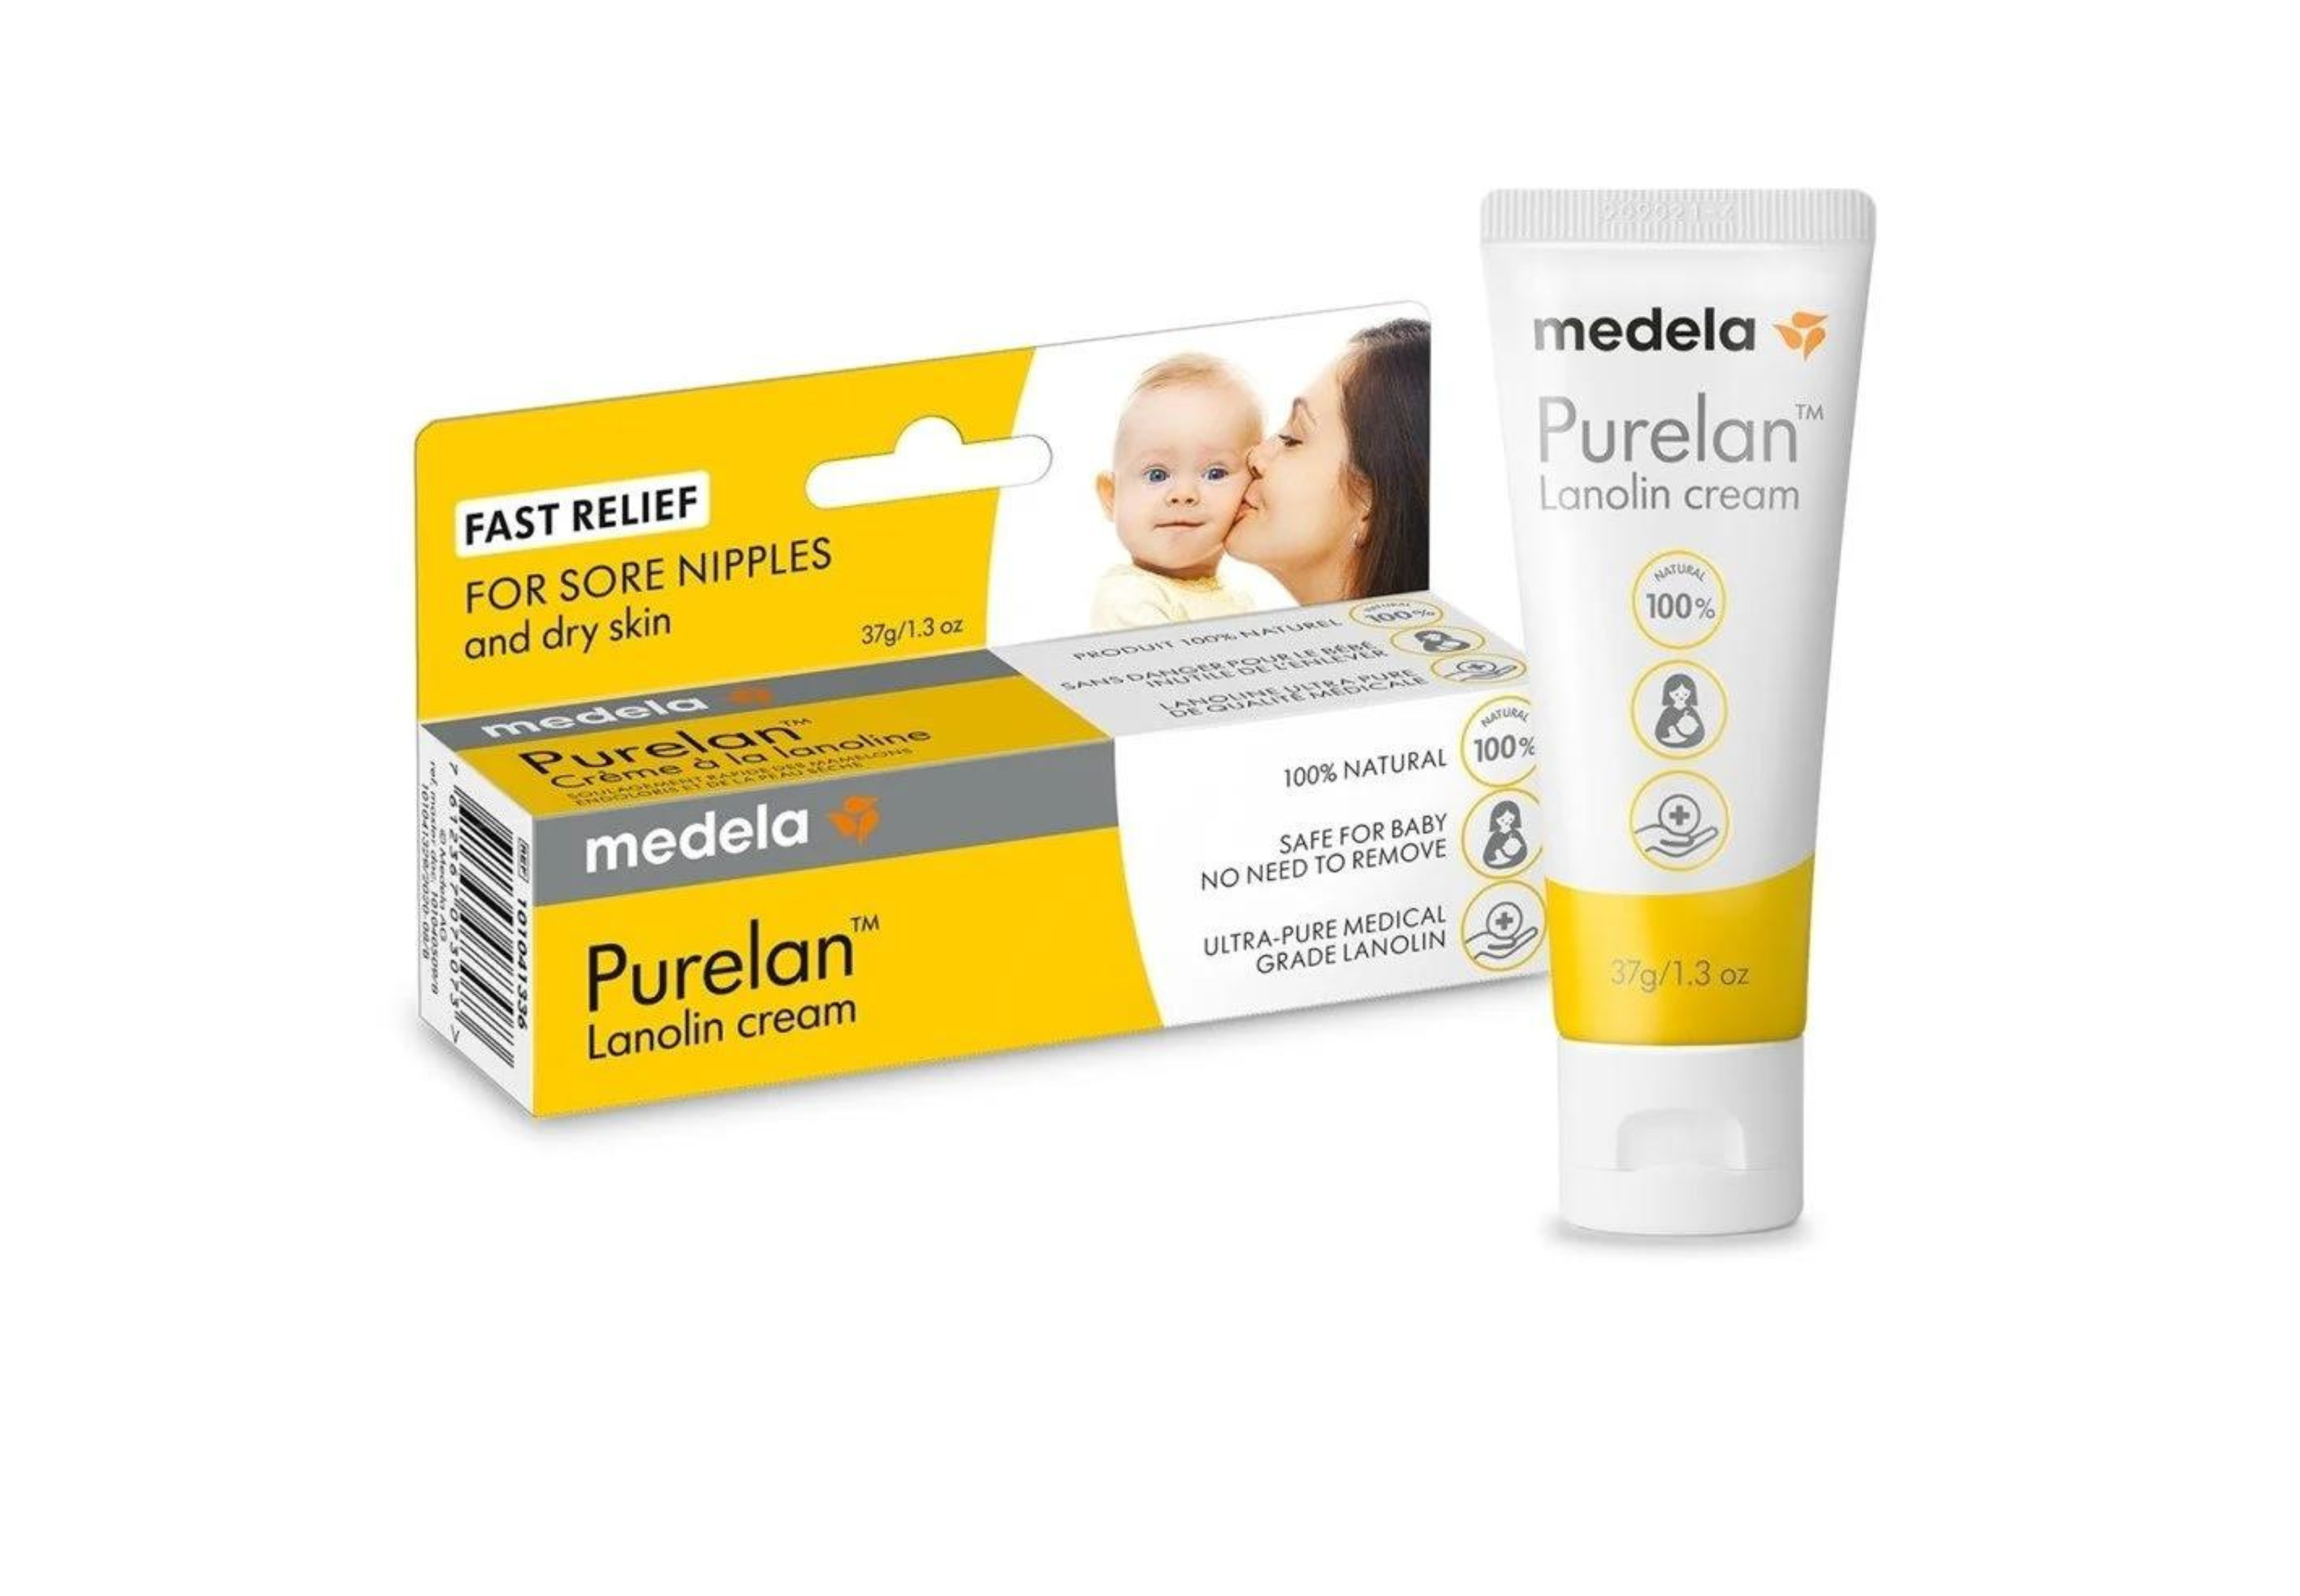 Medela Purelan Lanolin Cream 37g/1.3 fl oz